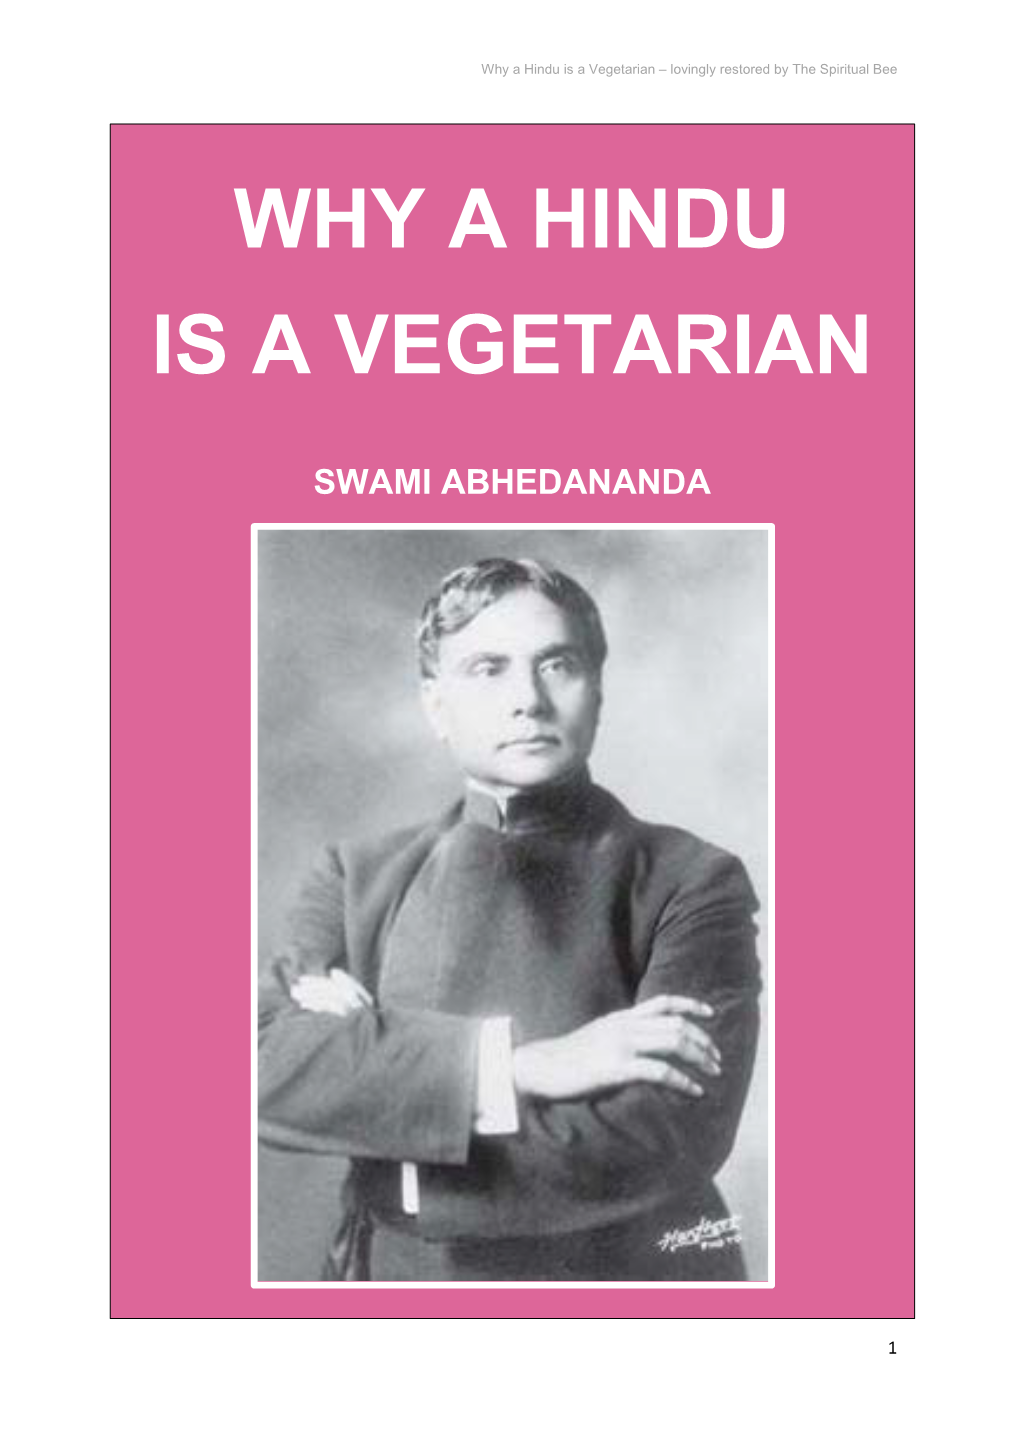 Why a Hindu Is a Vegetarian by Swami Abhedananda (Free Book)